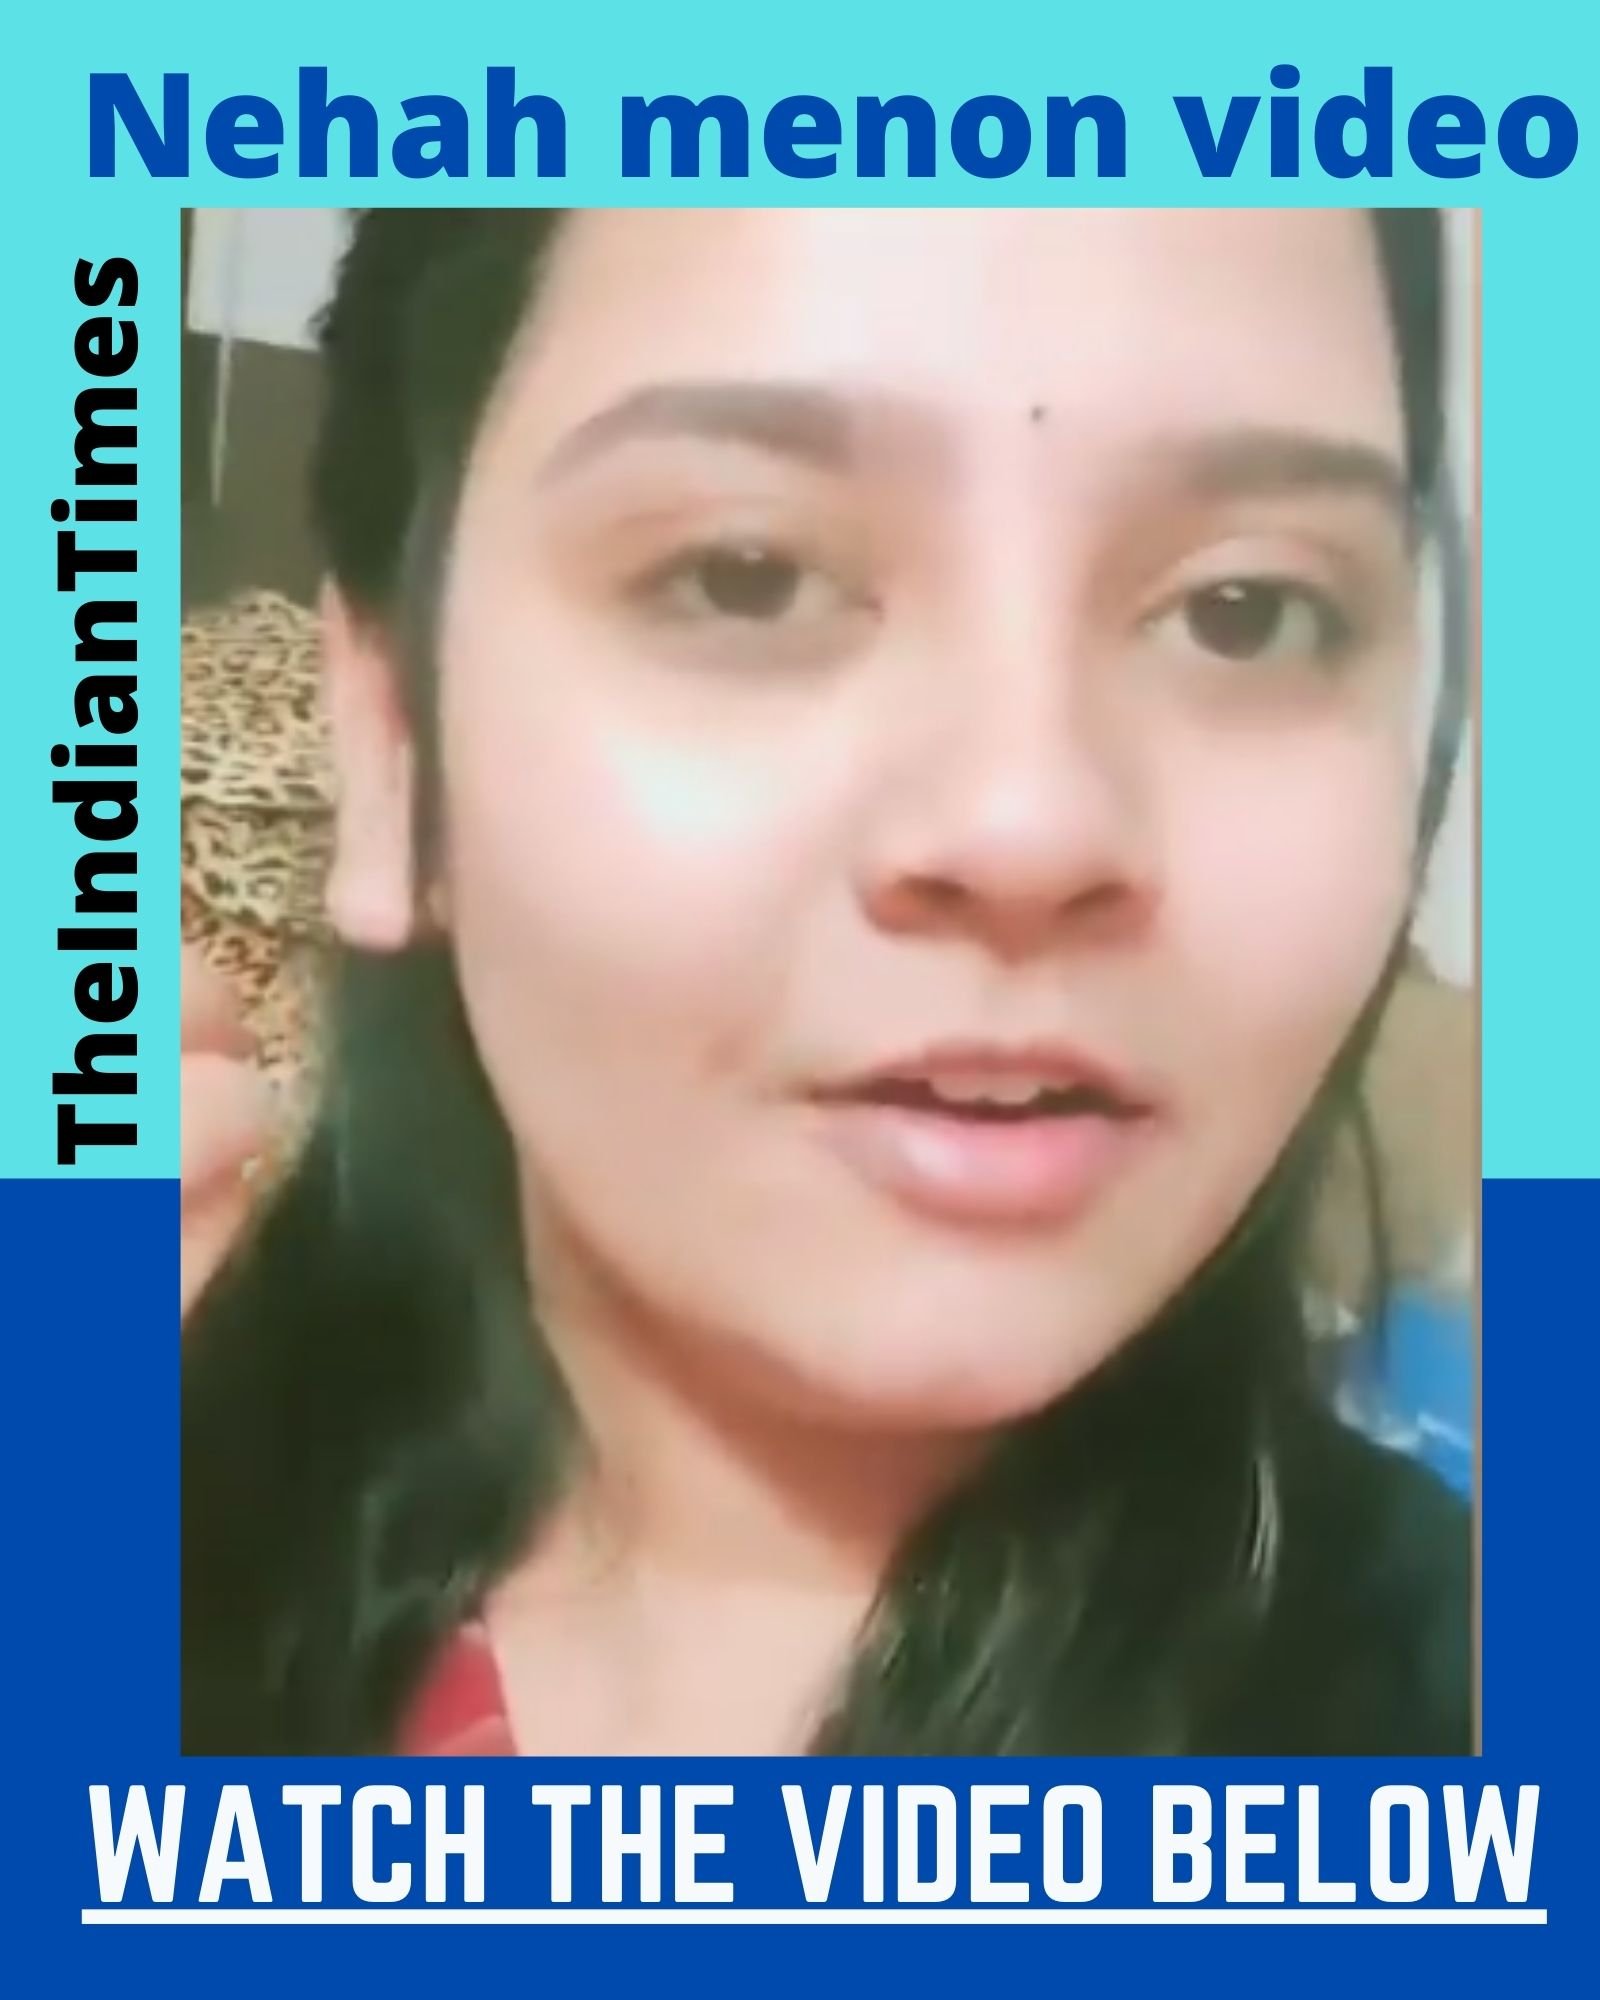 sivangi கூட என்ன comapre பண்ணாதீங்க please! நேஹா மேனன் viral video 1